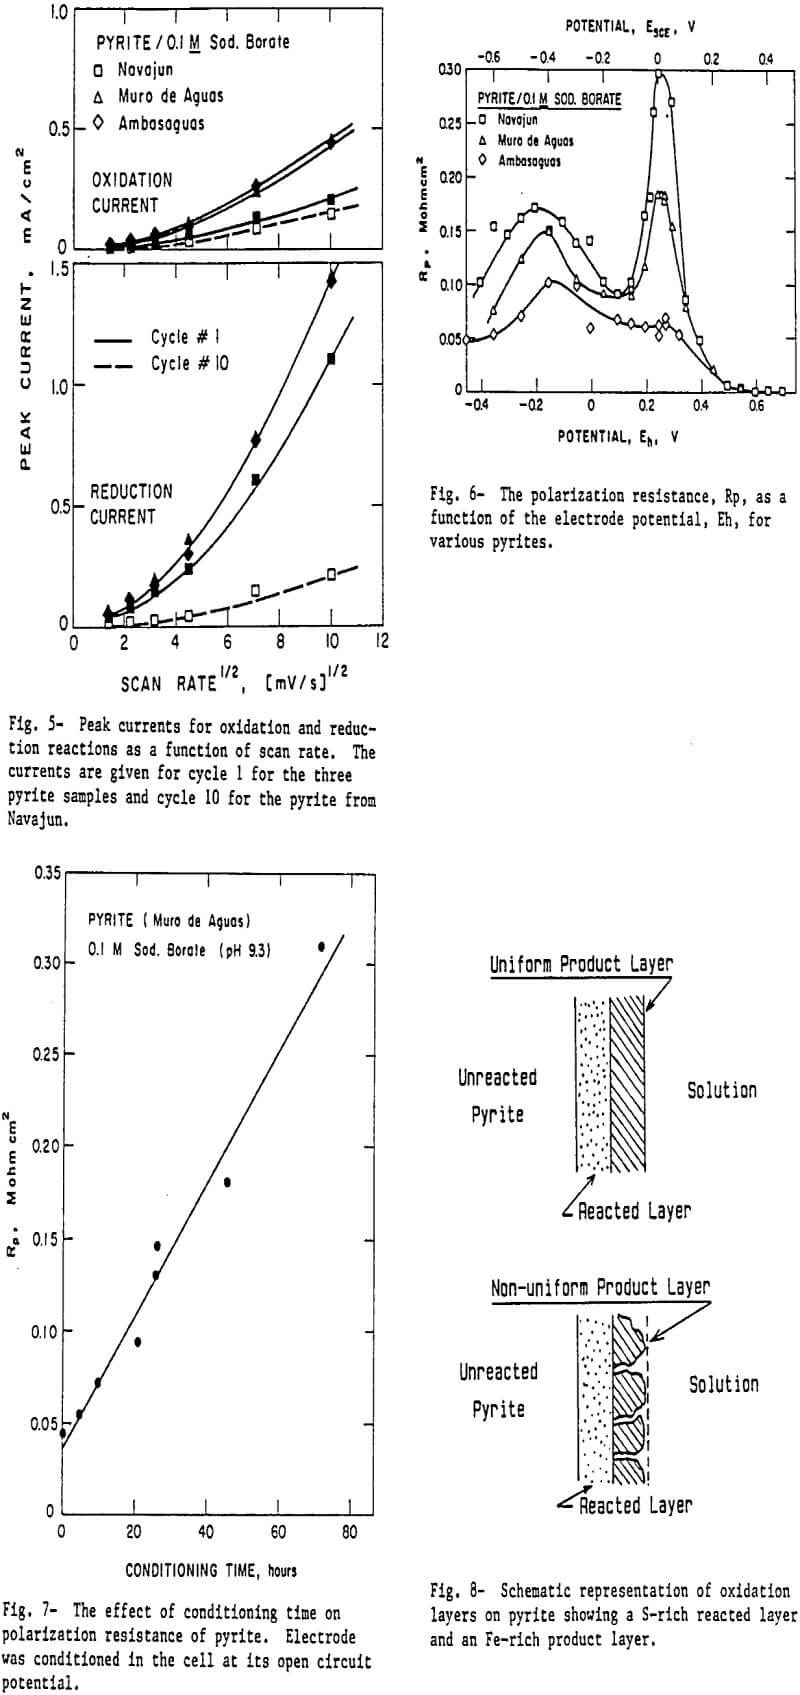 pyrite-oxidation polarization resistance